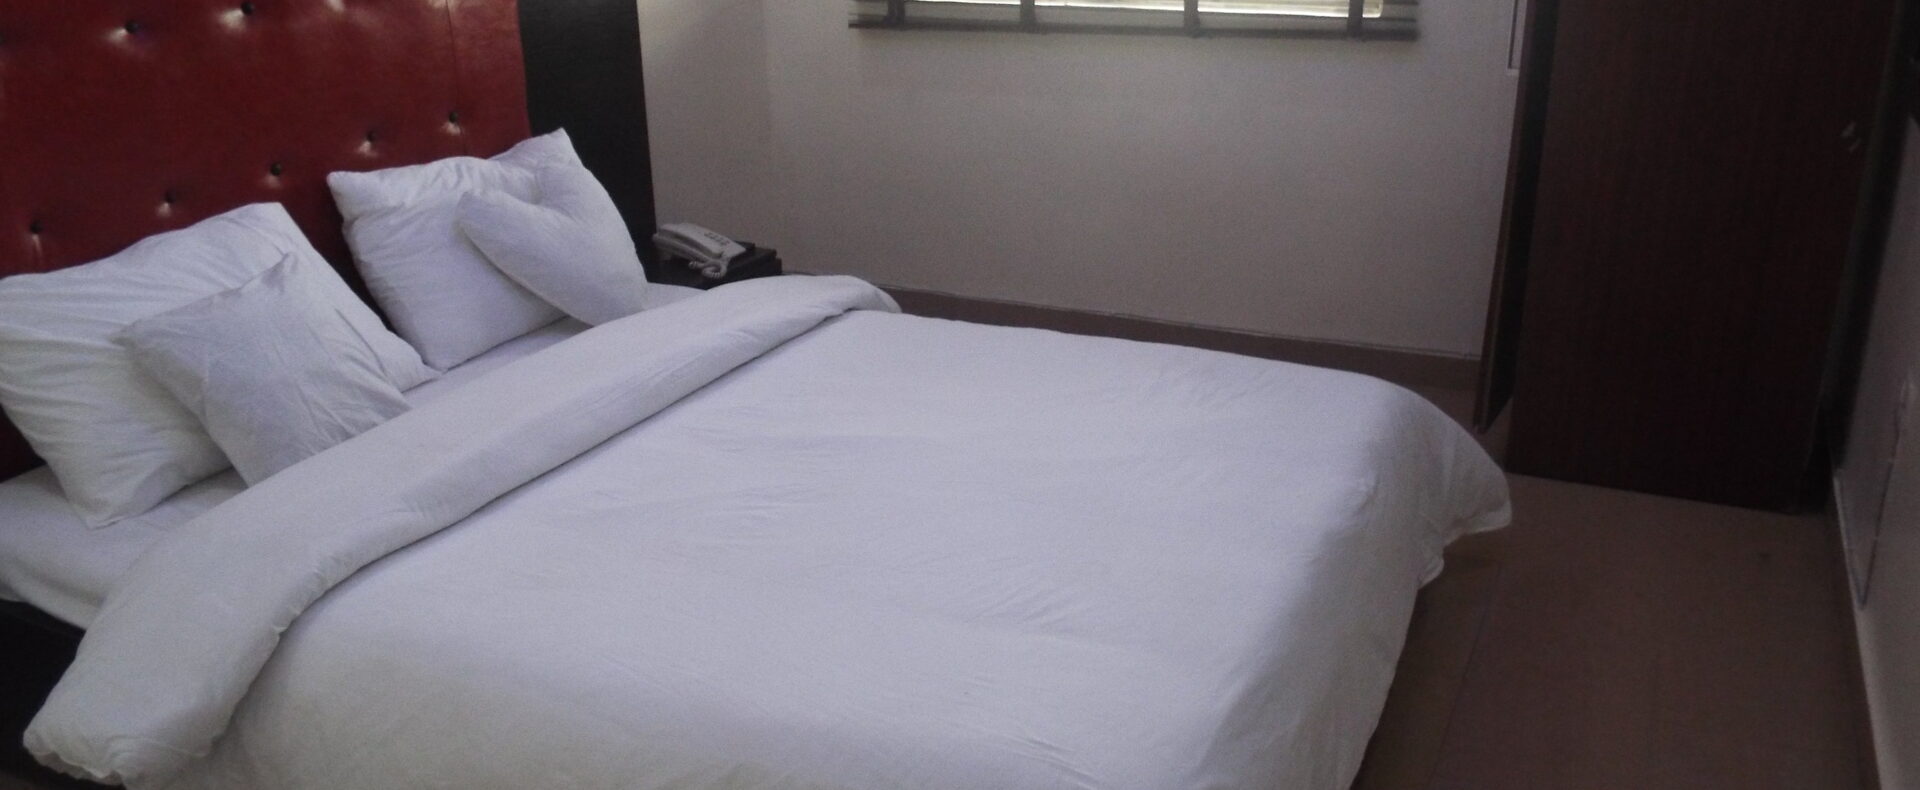 Super Fully Furnished 2 Bedroom Flat Short Let In Lagos Nigeria